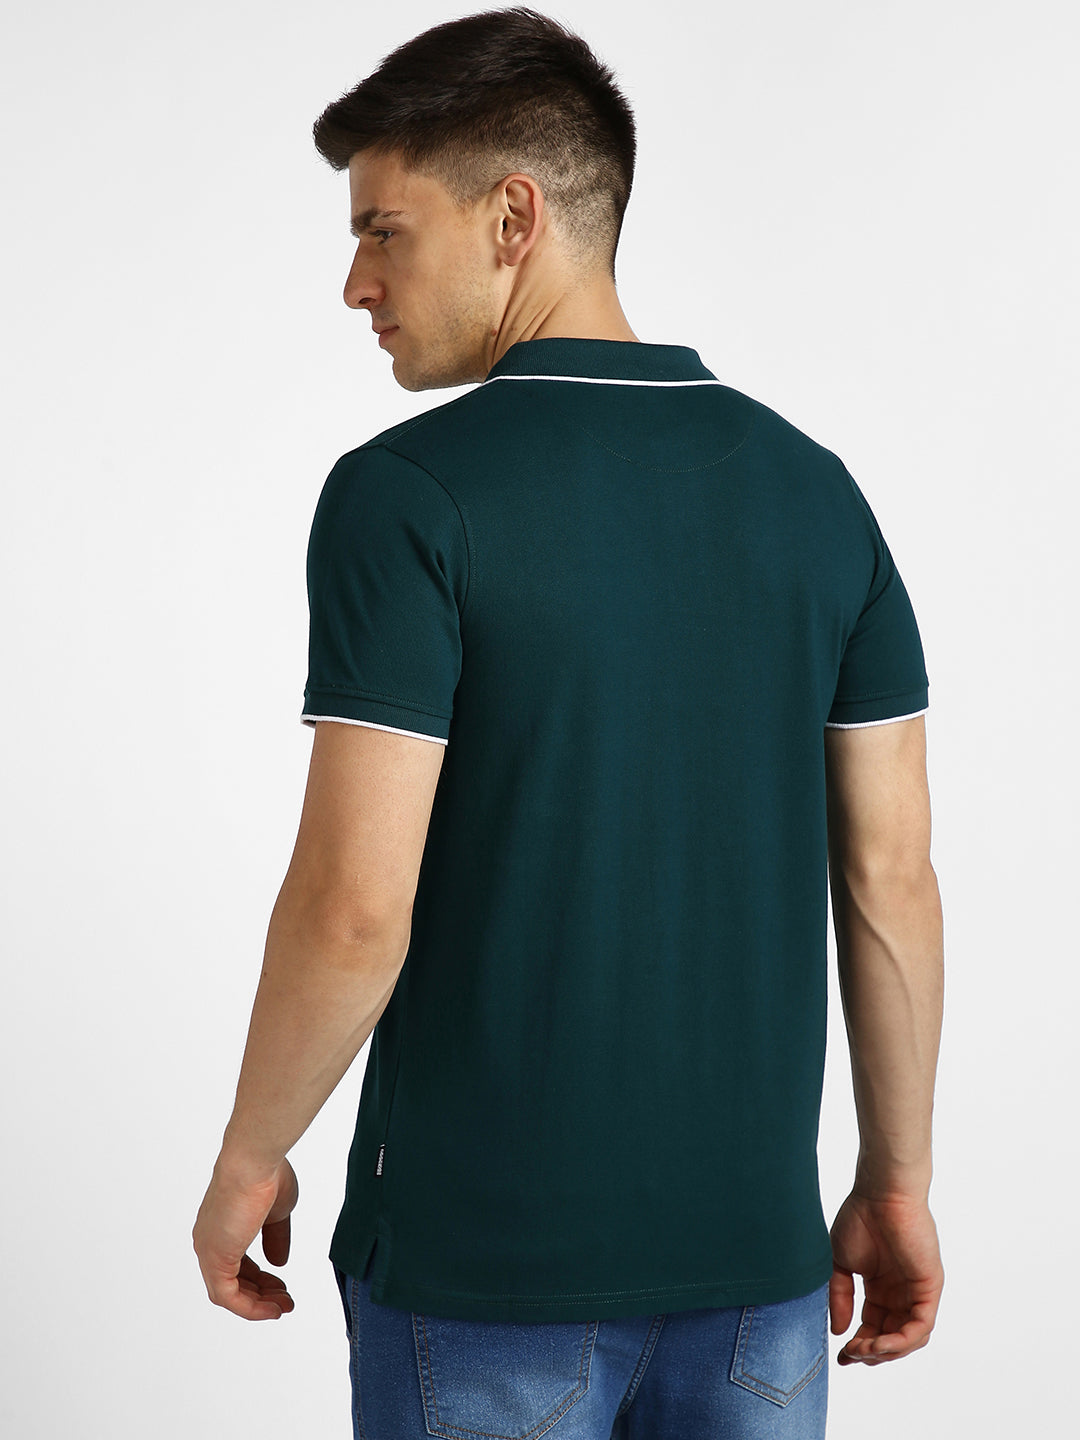 Urbano Fashion Men's Green Solid Slim Fit Half Sleeve Cotton Polo T-Shirt